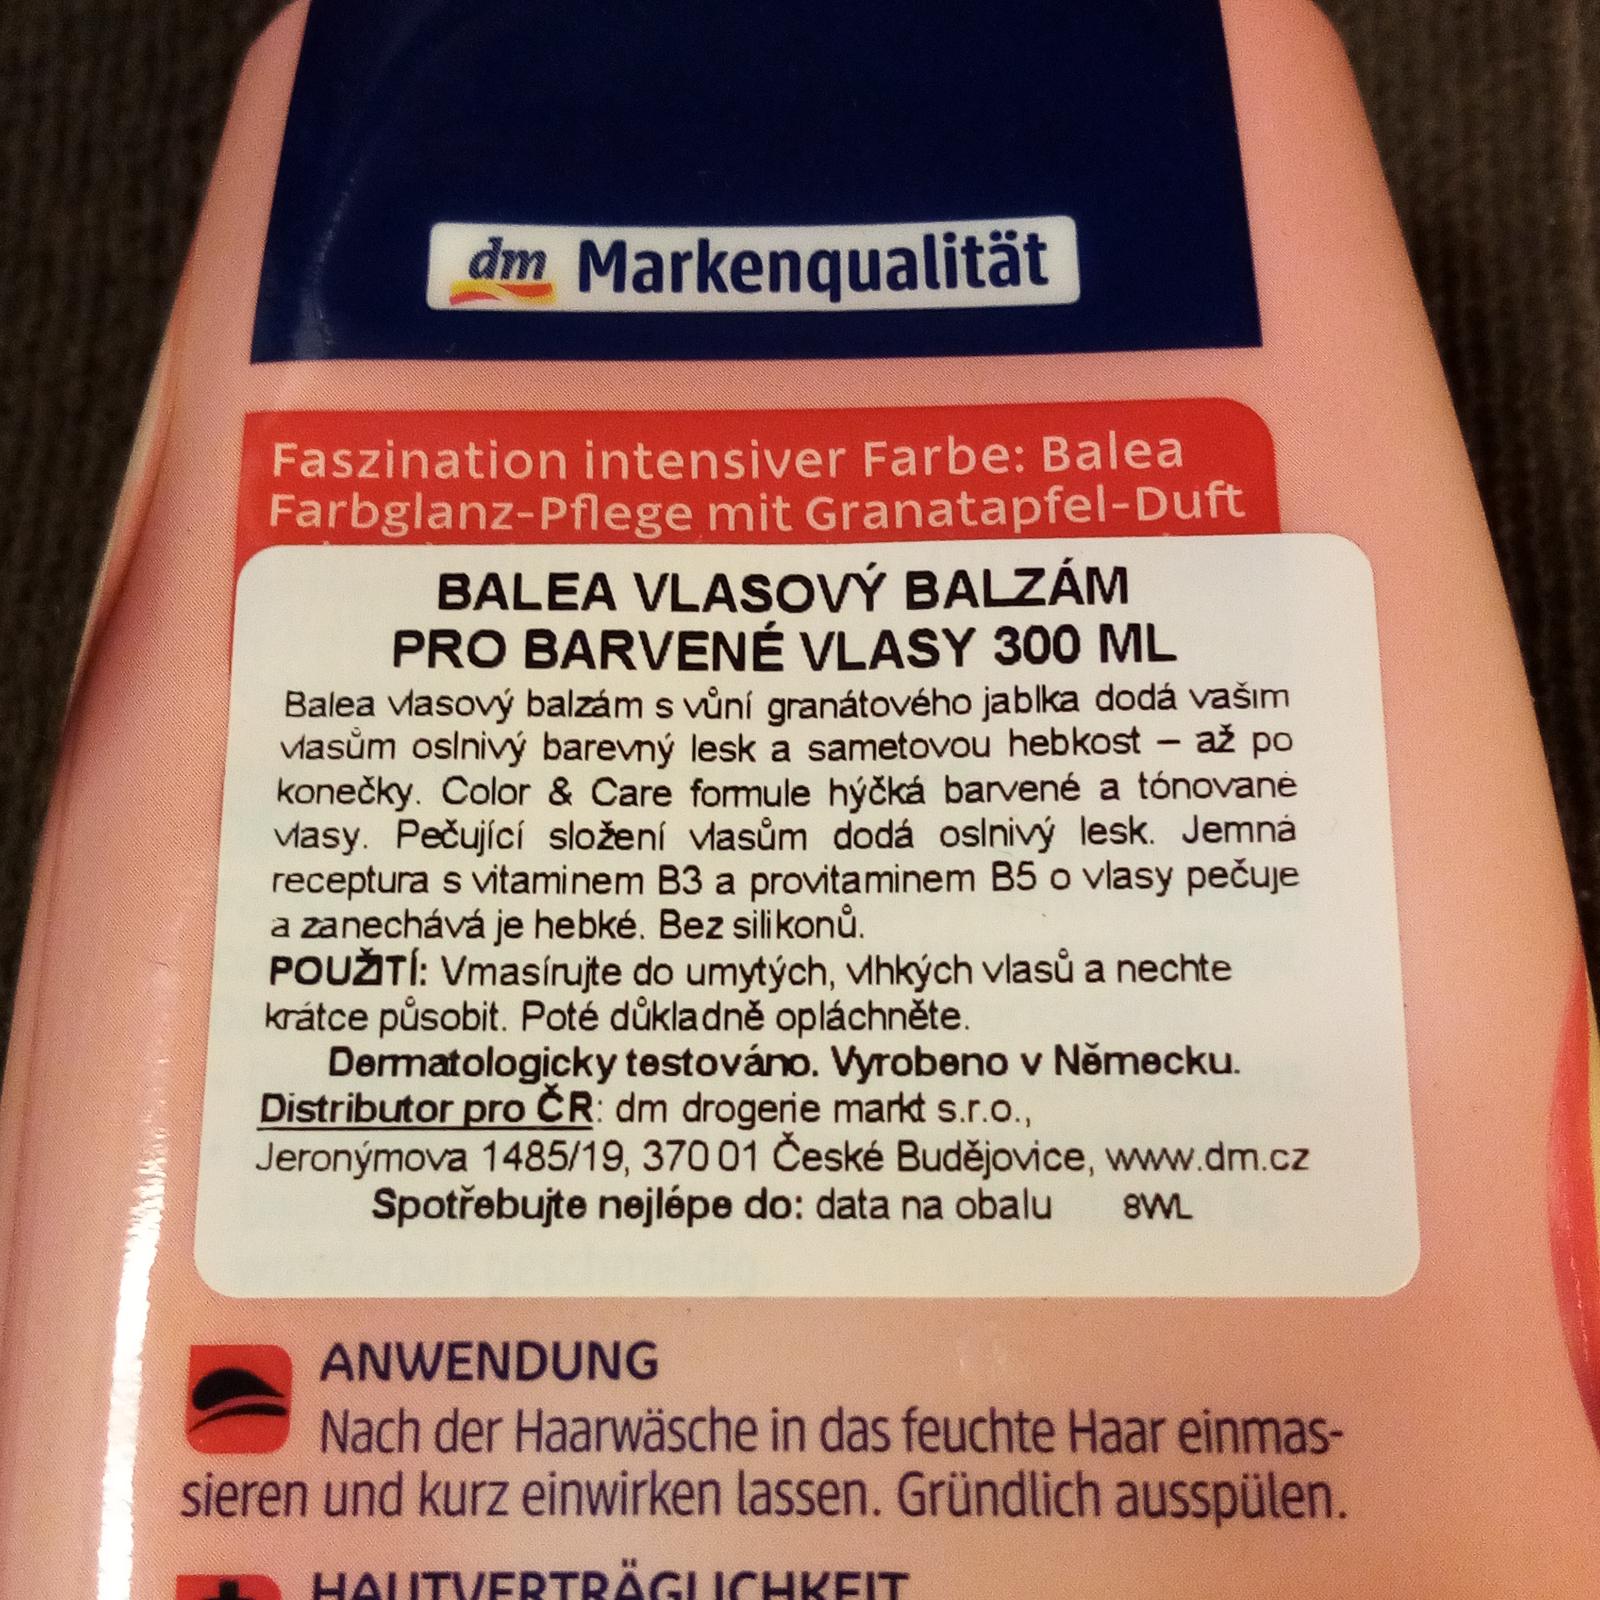 Vlasový balzám pro barvené vlasy BALEA, ca 50 % ze 300 ml - Kosmetika a parfémy